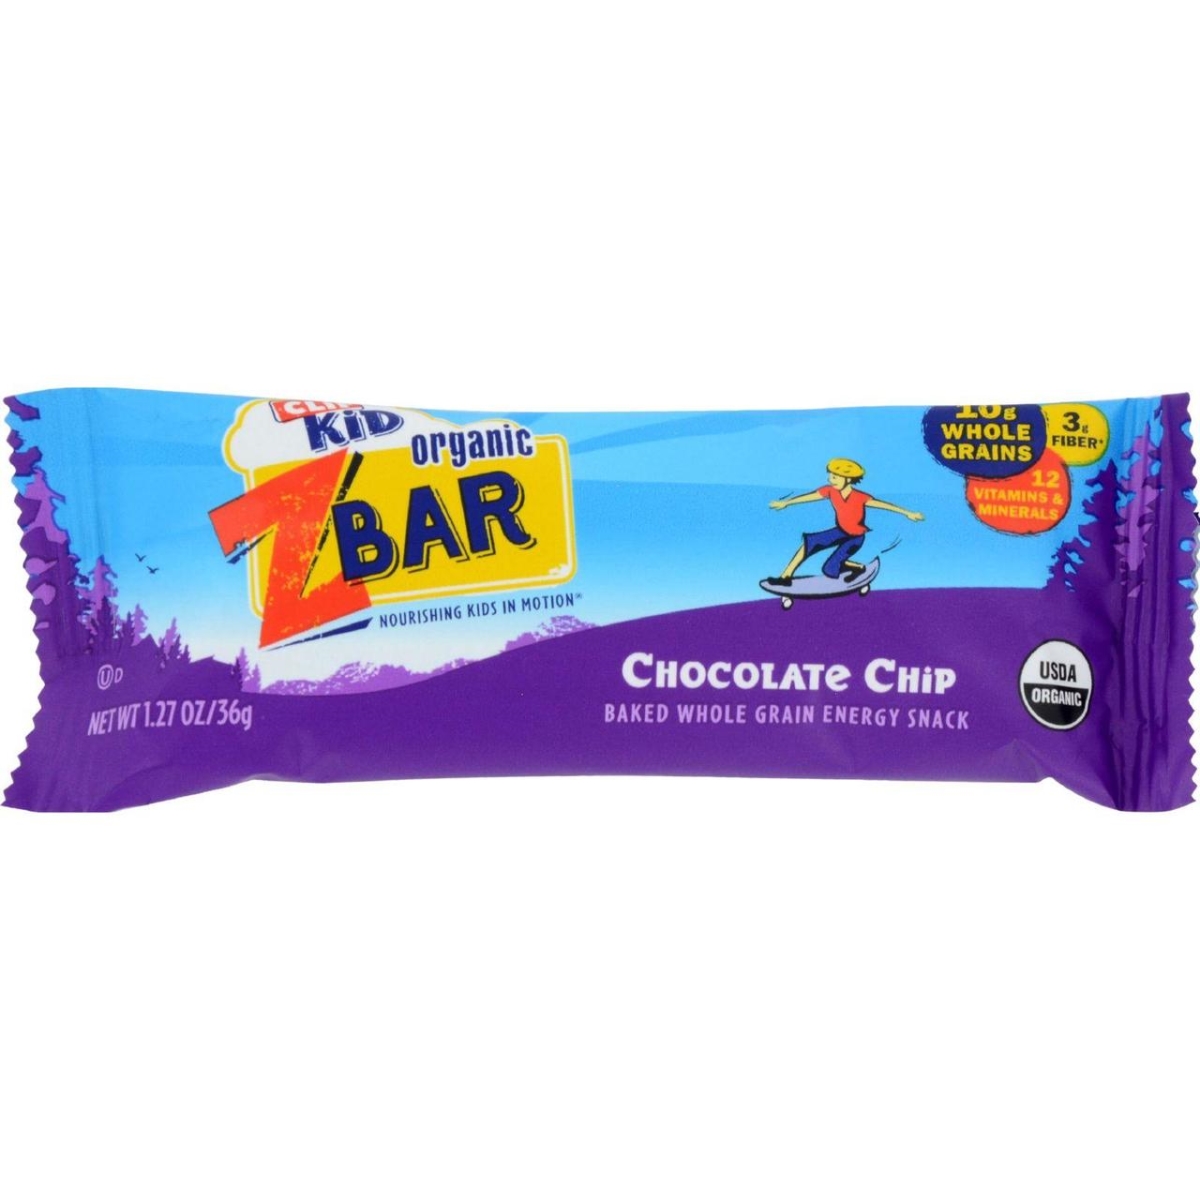 Clif Bar Hg0807917 1.27 Oz Organic Chocolate Chip Zbar - Case Of 18